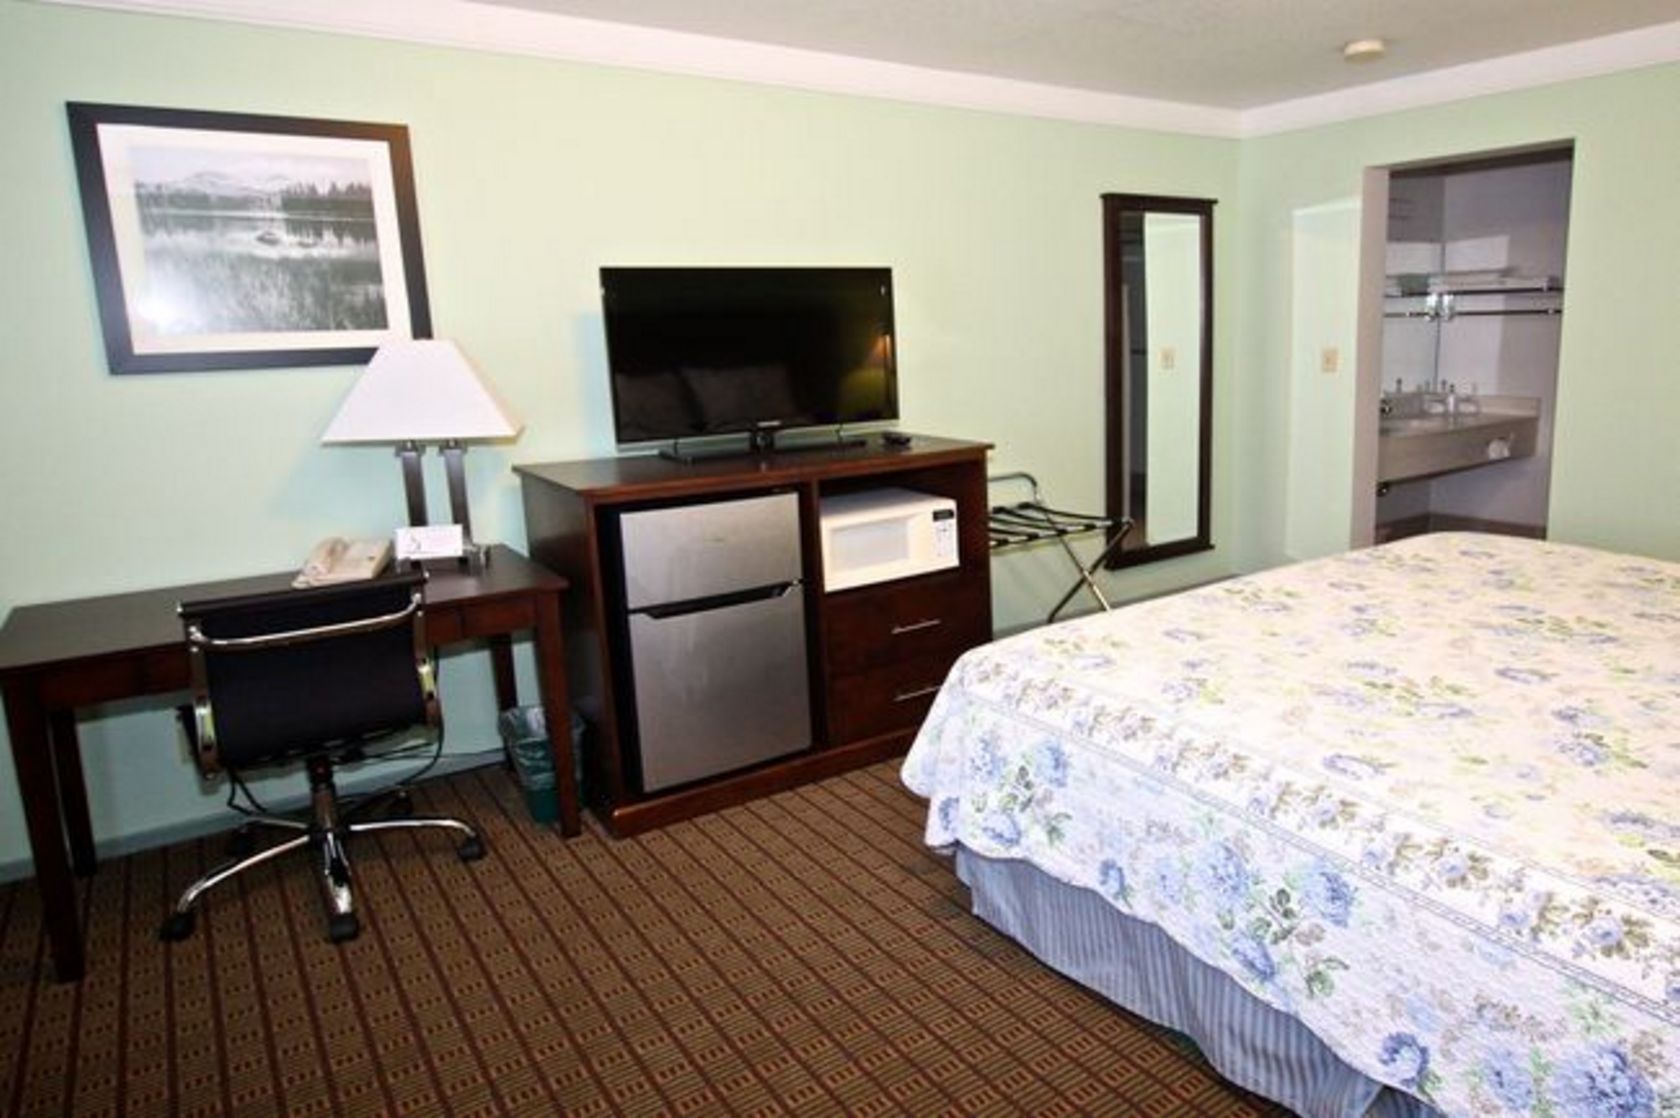 Guest Room With Queen Beds